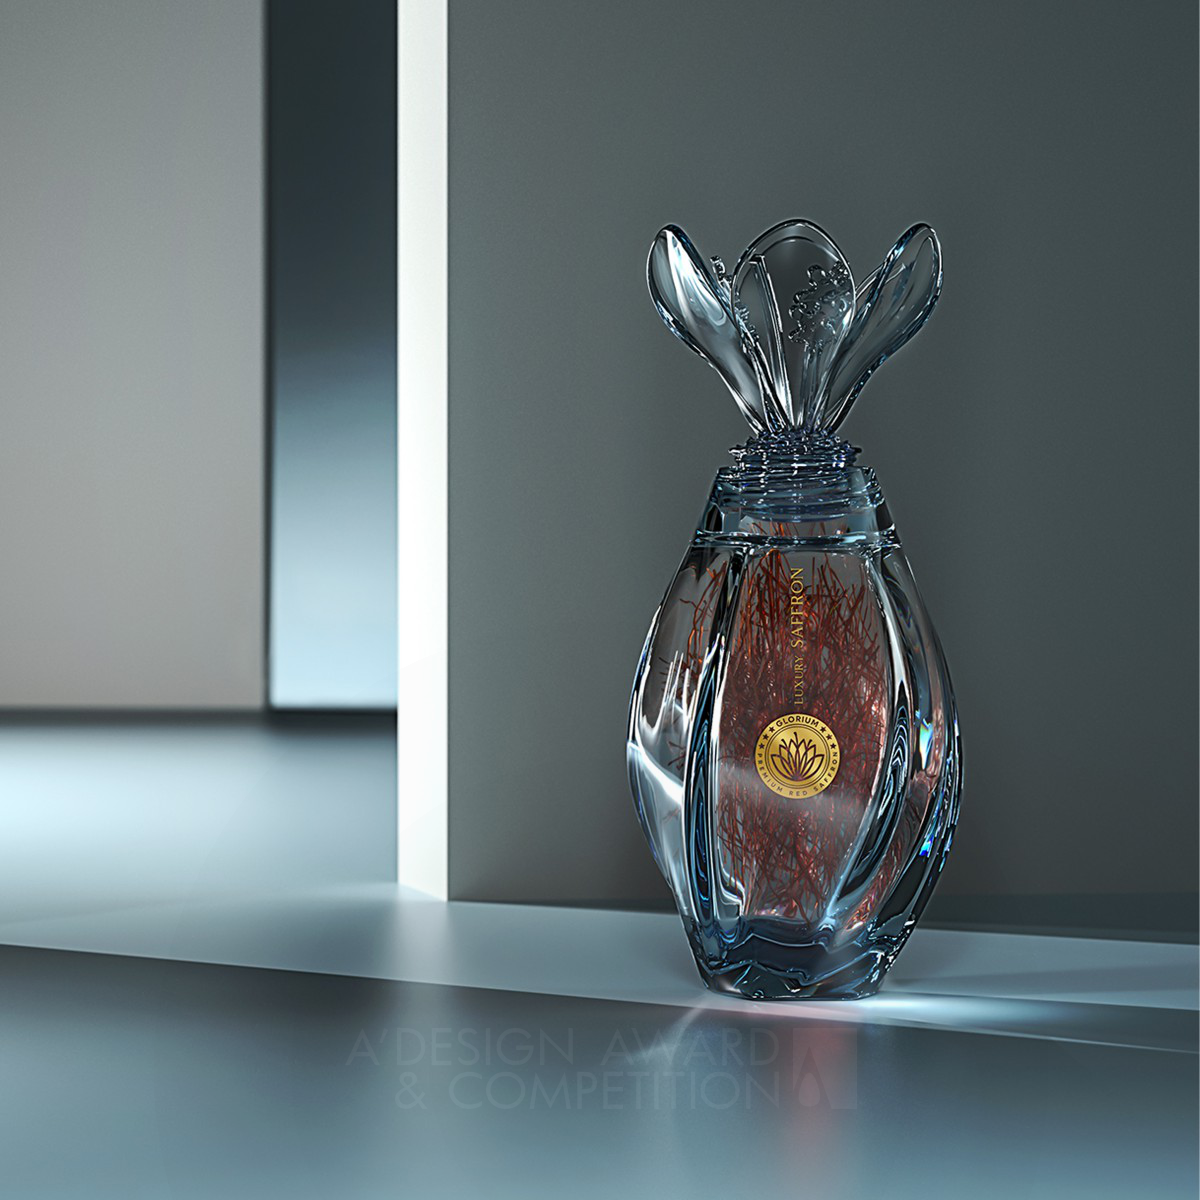 Glorium Saffron Packaging by Arvin Maleki